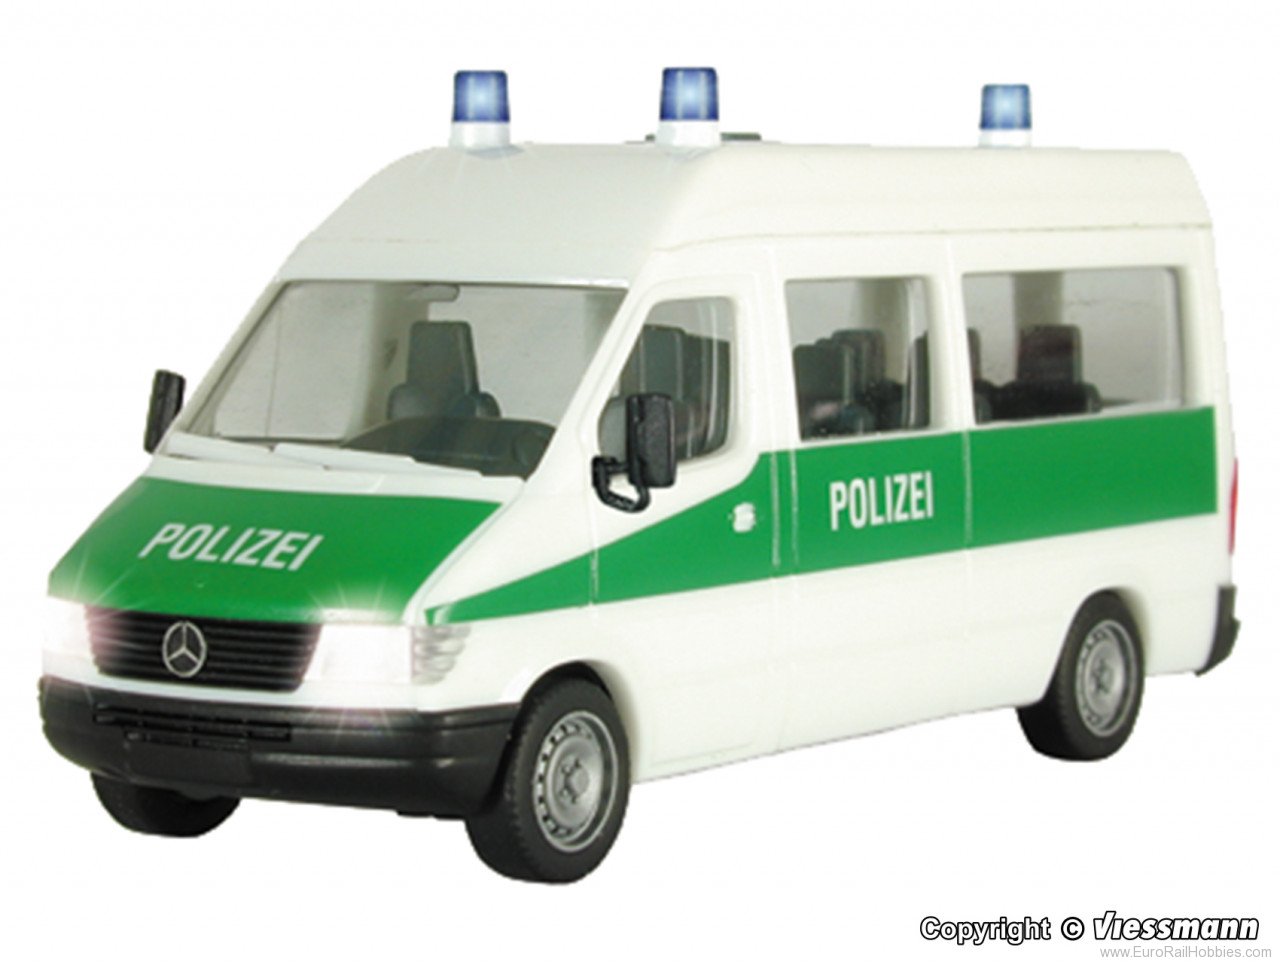 Viessmann 1130 HO MERCEDES BENZ sprinter police with electri